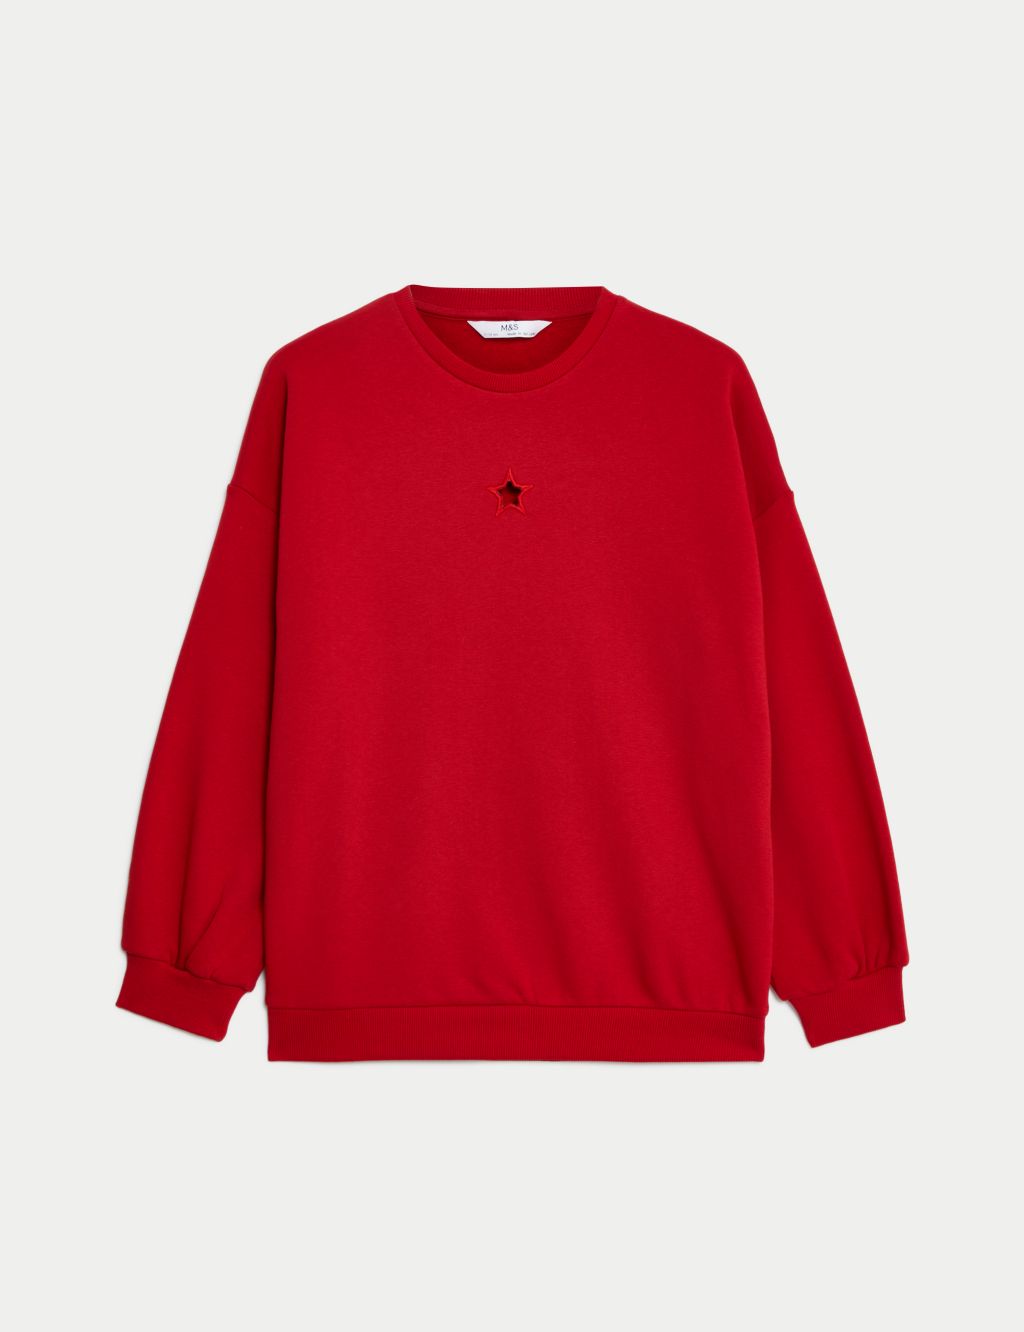 Cotton Rich Star Sweatshirt (6-16 Yrs) image 2